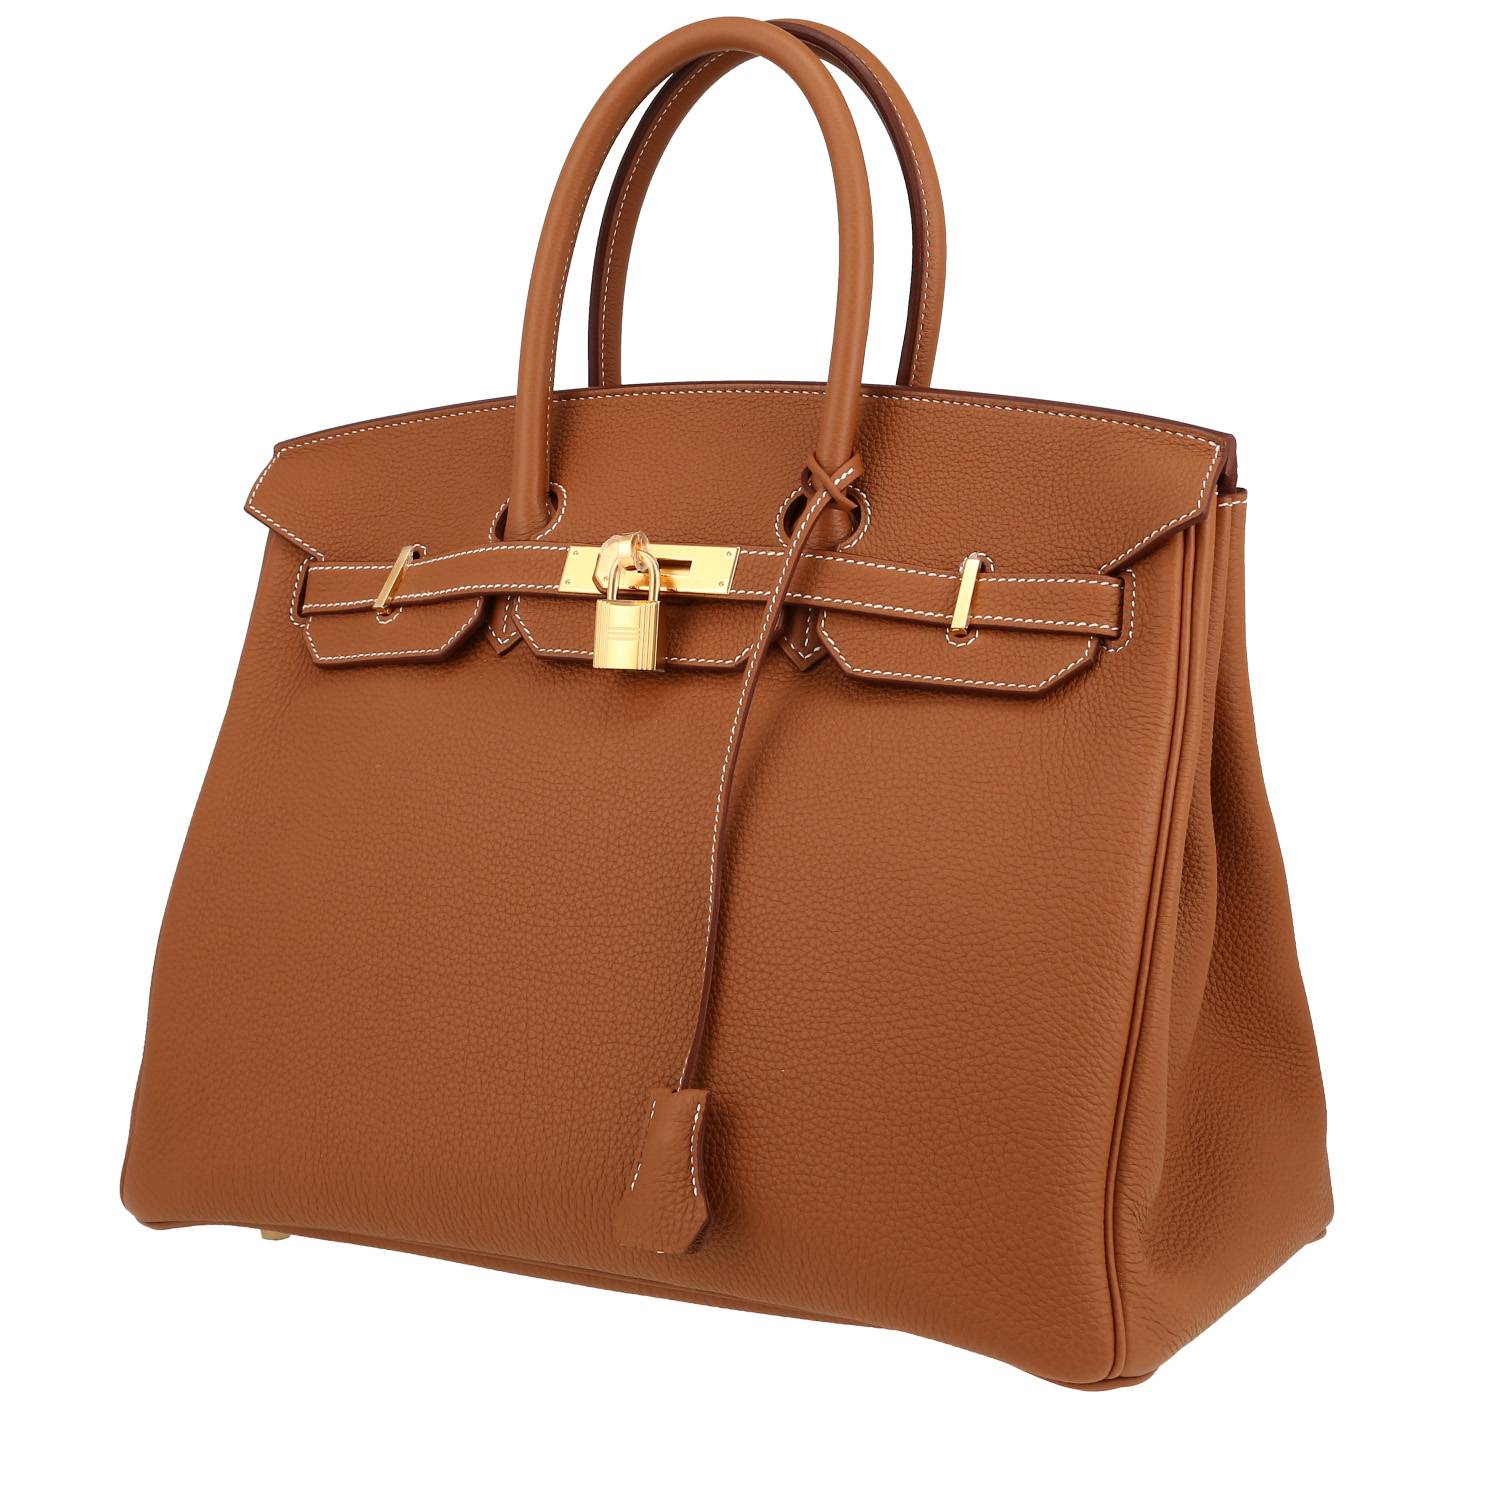 Birkin 35 cm Handbag In Togo Leather